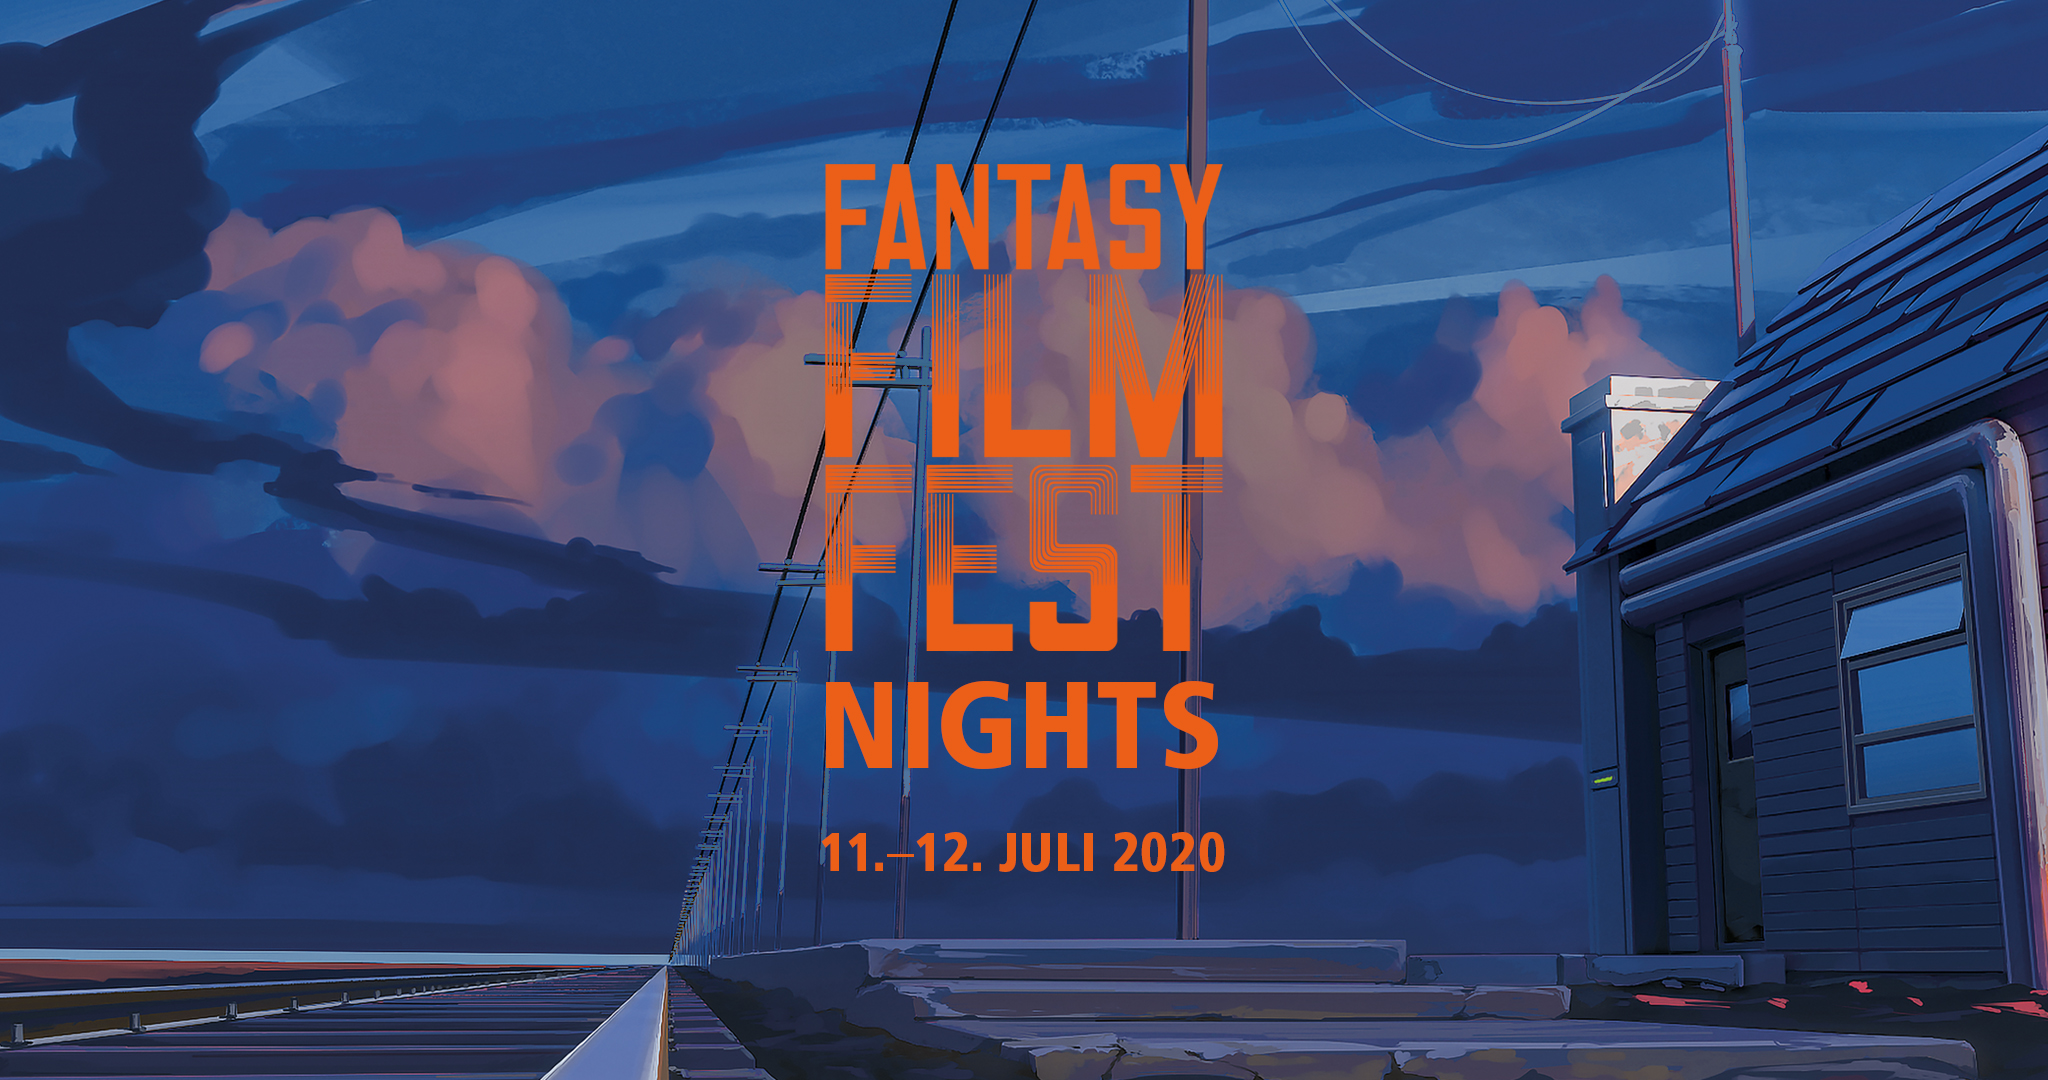 Fantasy Filmfest Nights 2020